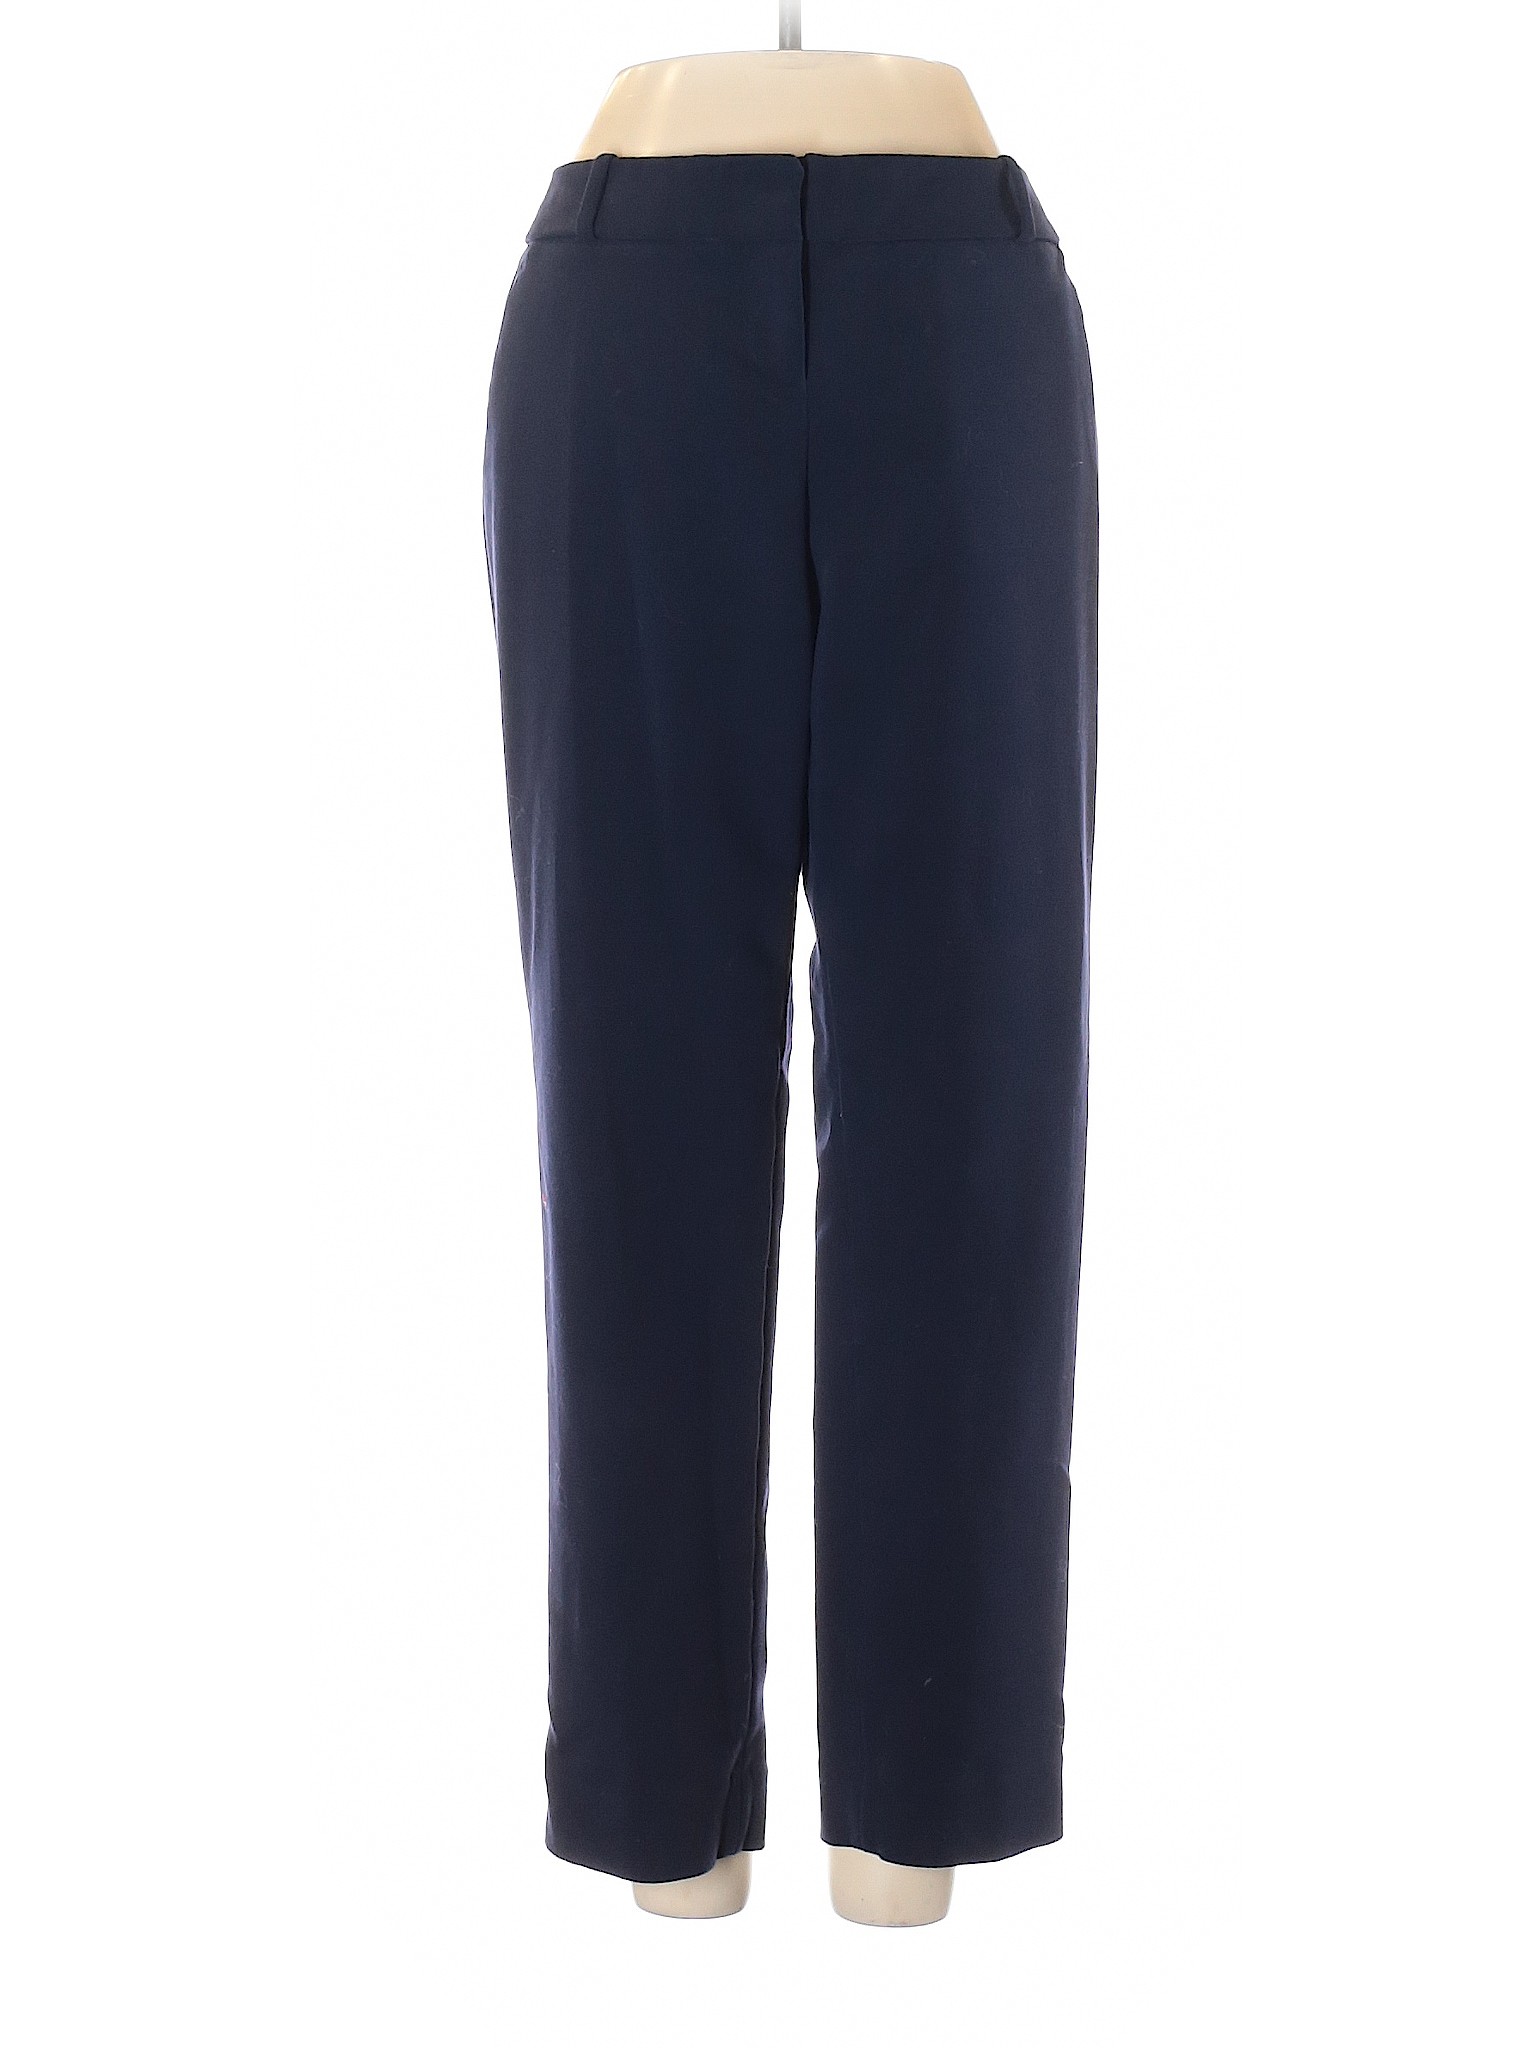 The Limited Women Blue Dress Pants 4 | eBay